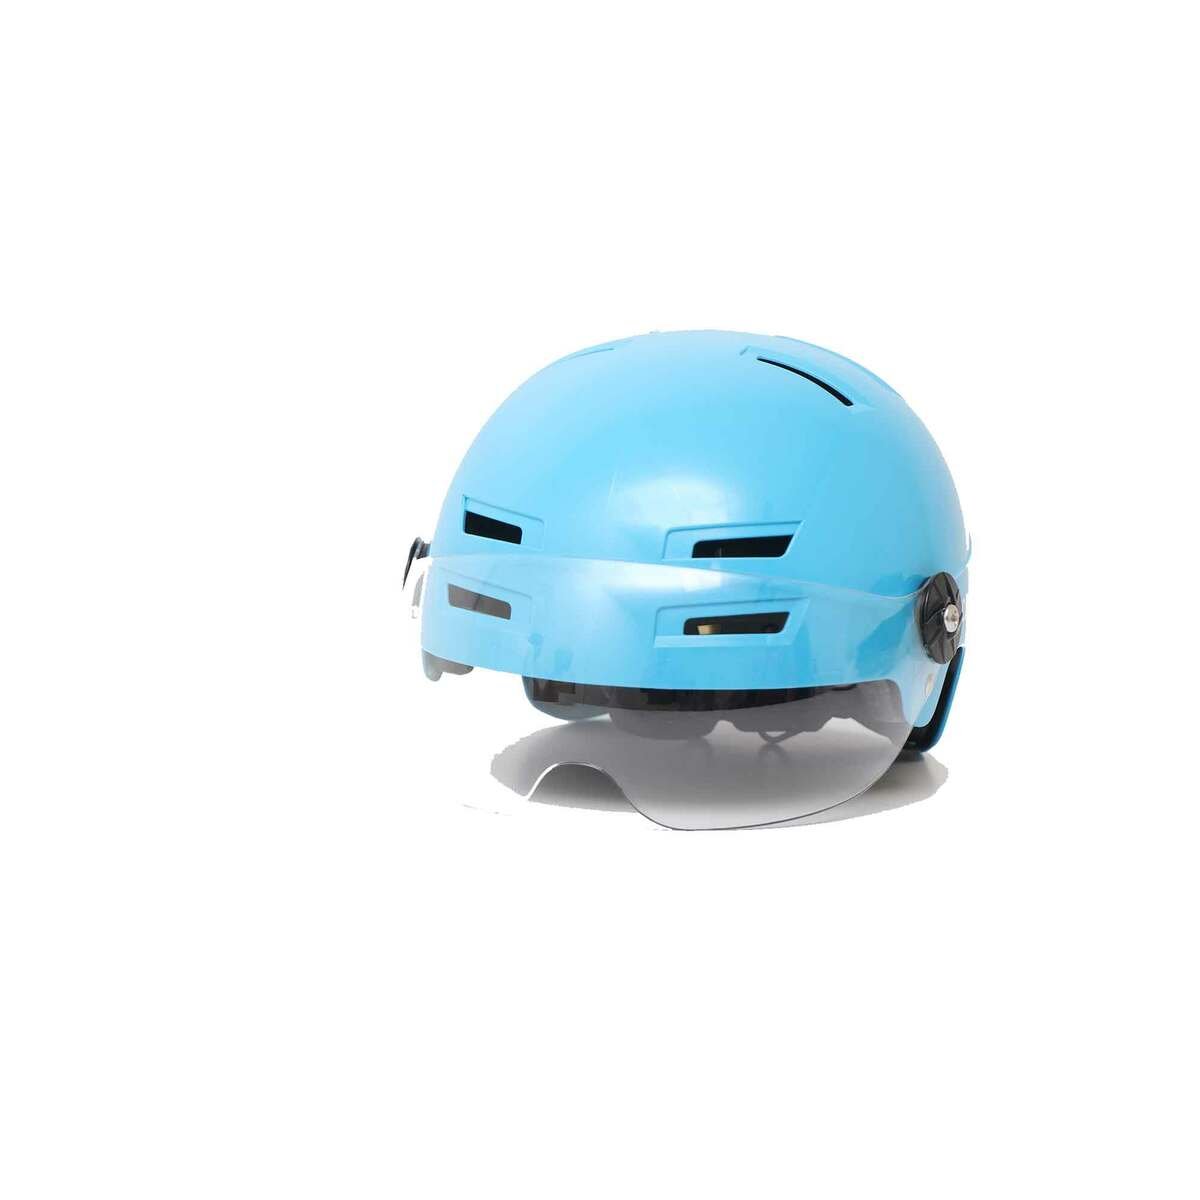 Sports INC Bicycle Helmet SH-01 Assorted Color & Design